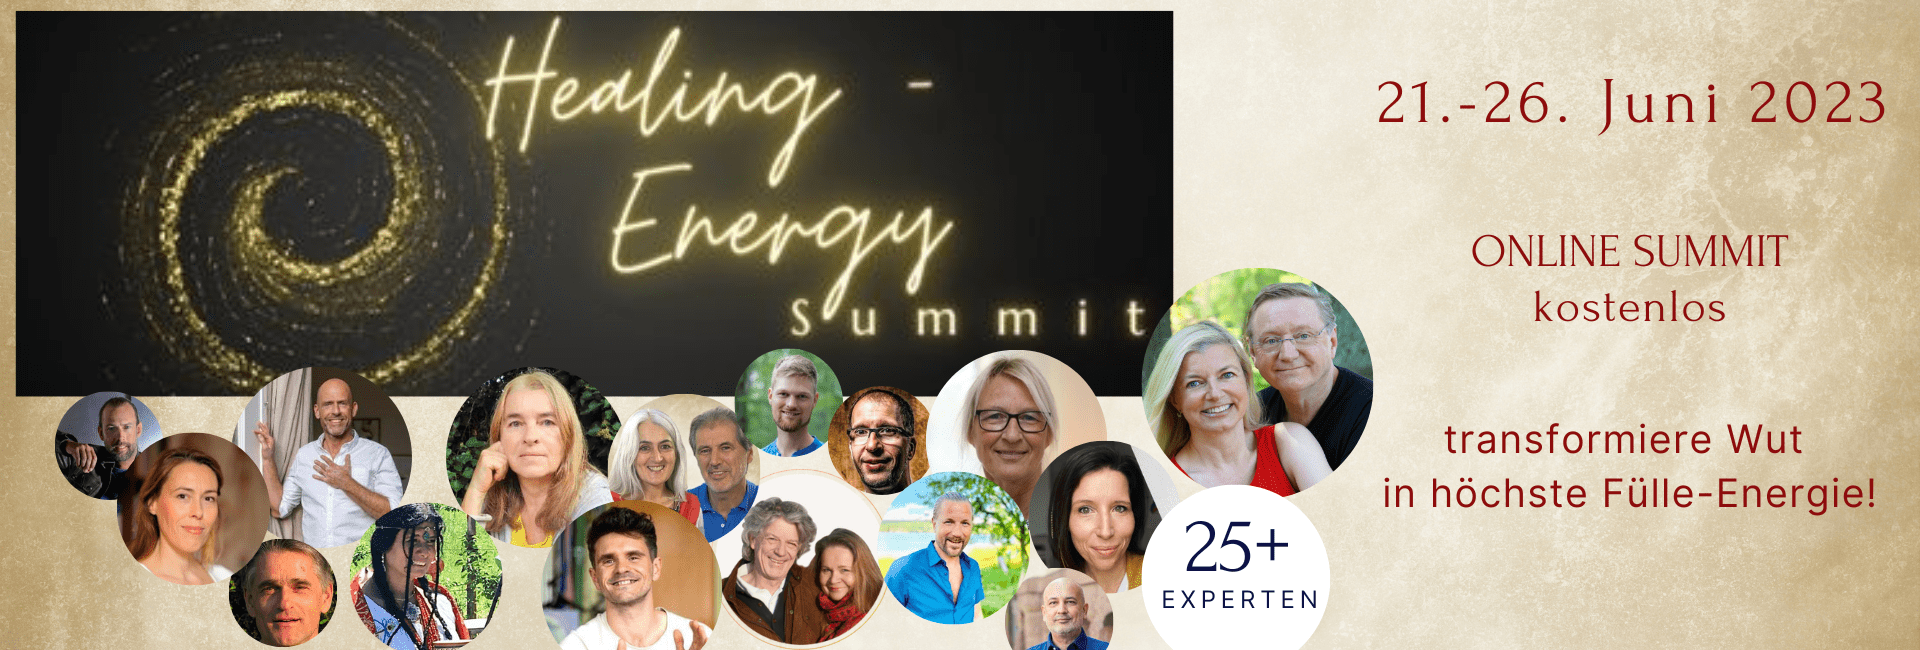 Healing Energy Summit 2023